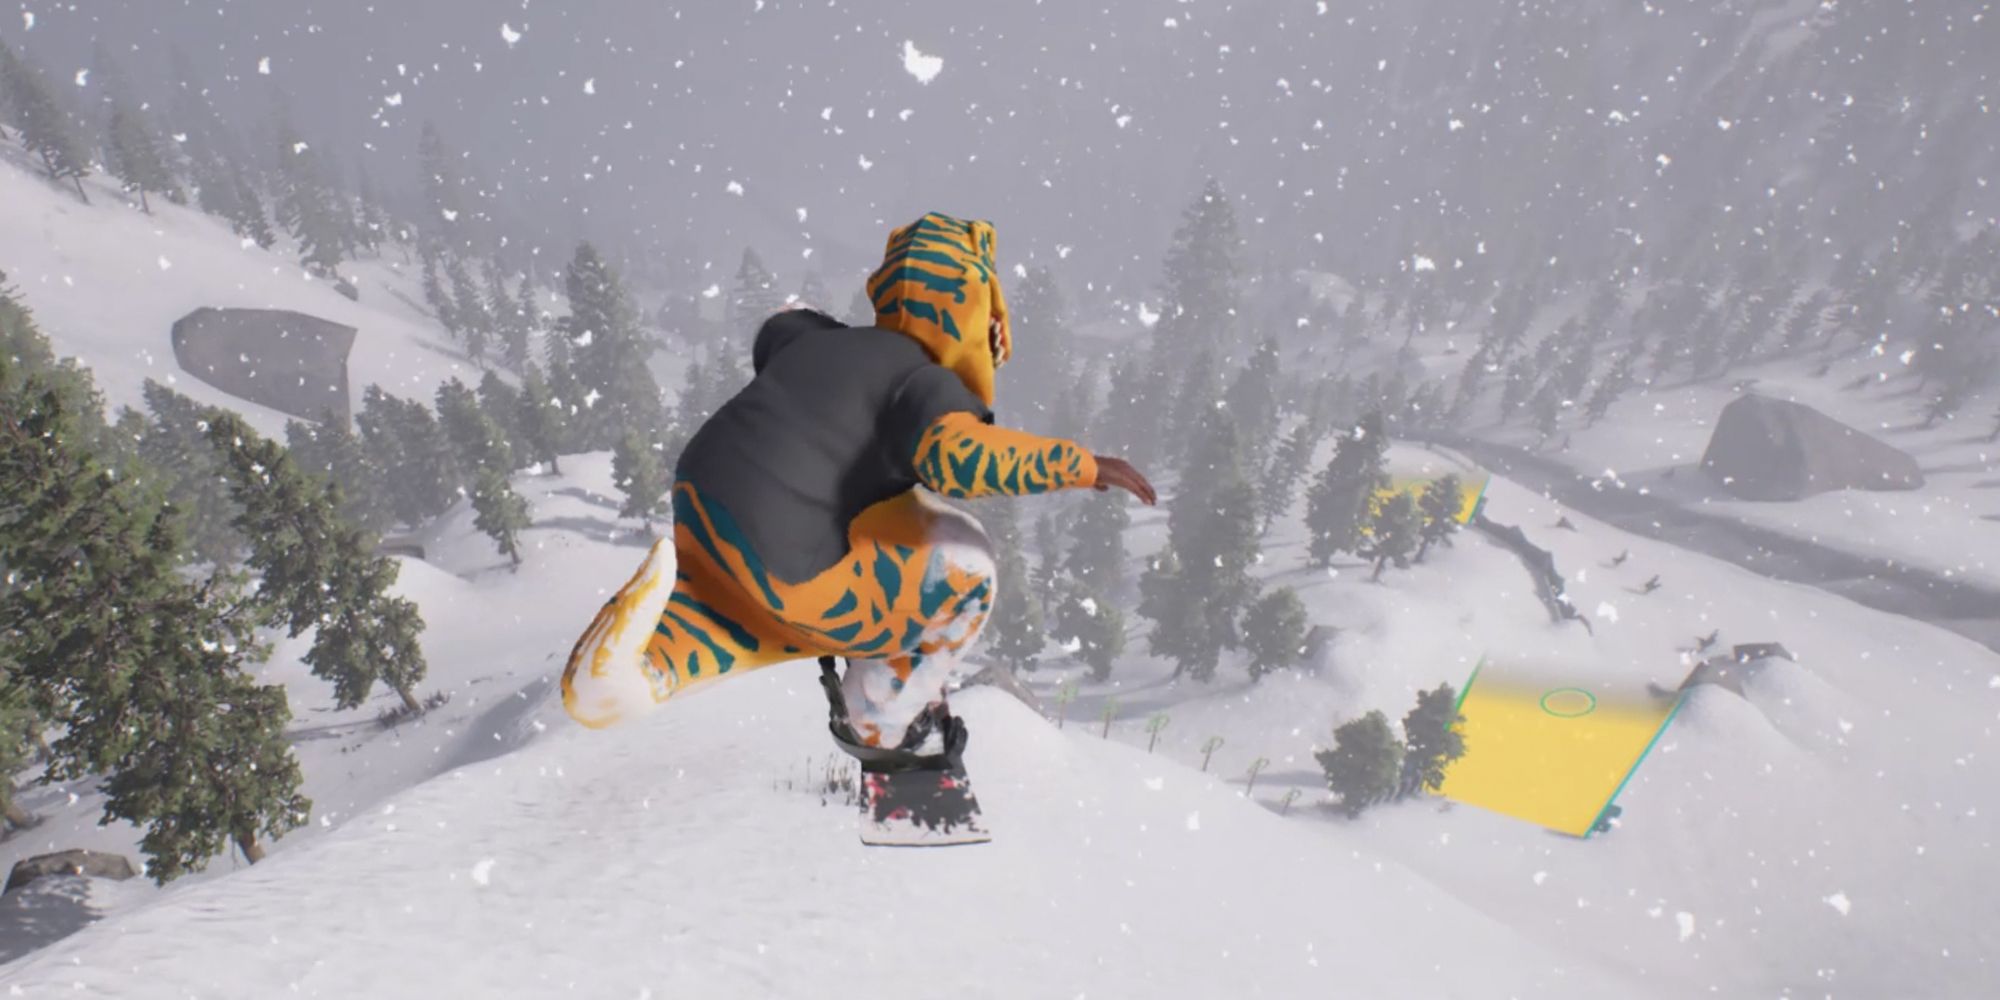 Riders Republic. Dinosaur costume riding a snowboard.